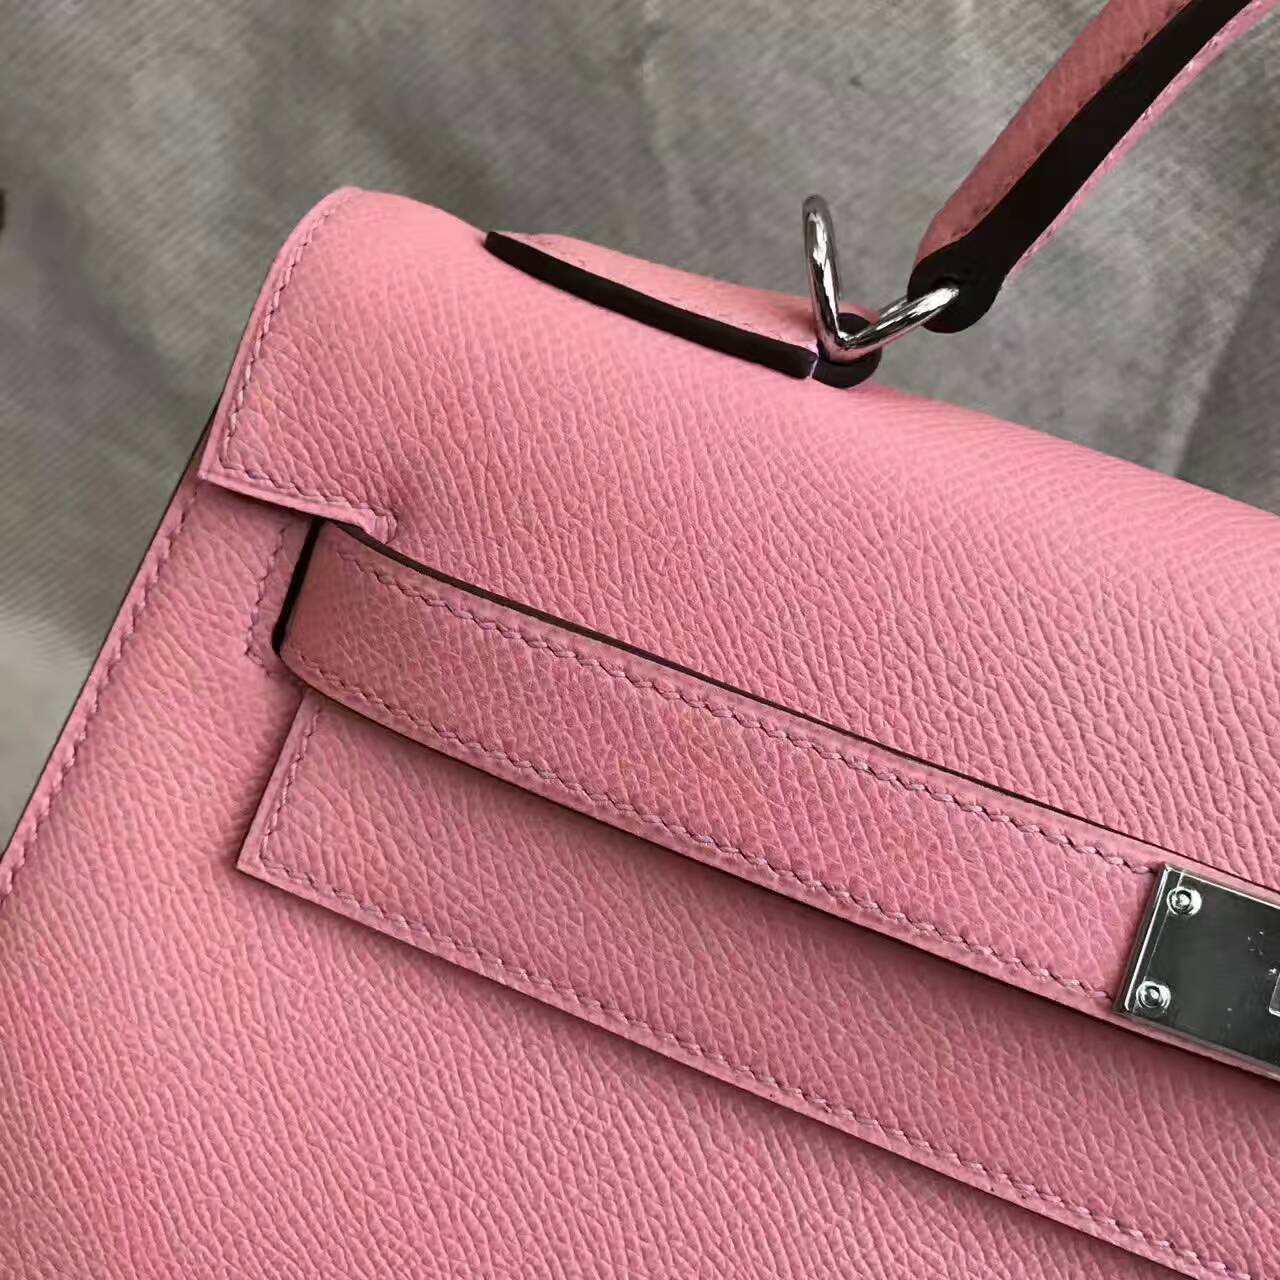 New Pretty Hermes Kelly32cm Handbag in 1Q Rose Confetti Epsom Leather